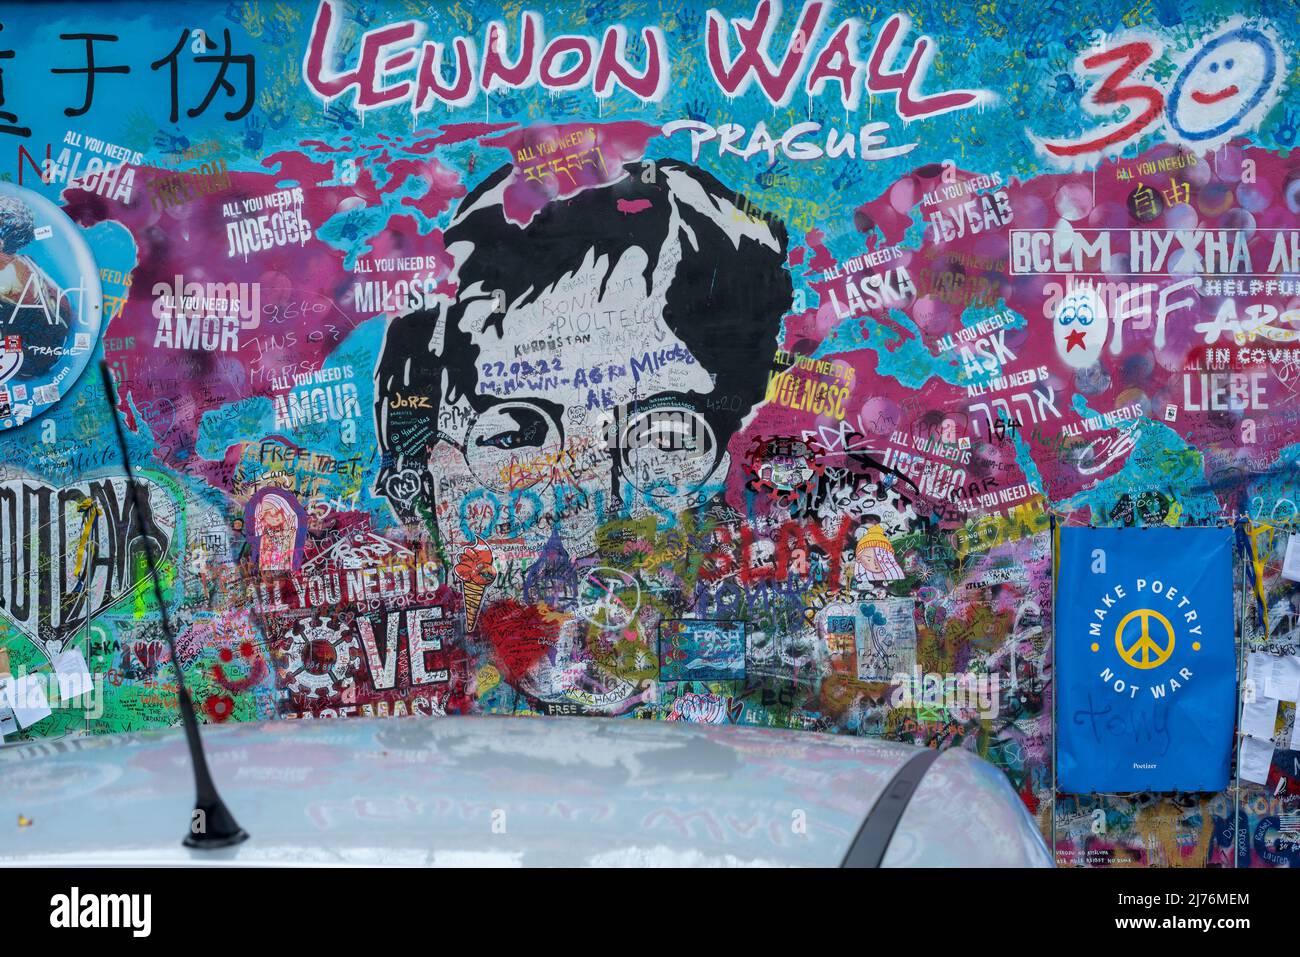 John Lennon Wall, John Lennon Wall, Prague, Czech Republic Stock Photo